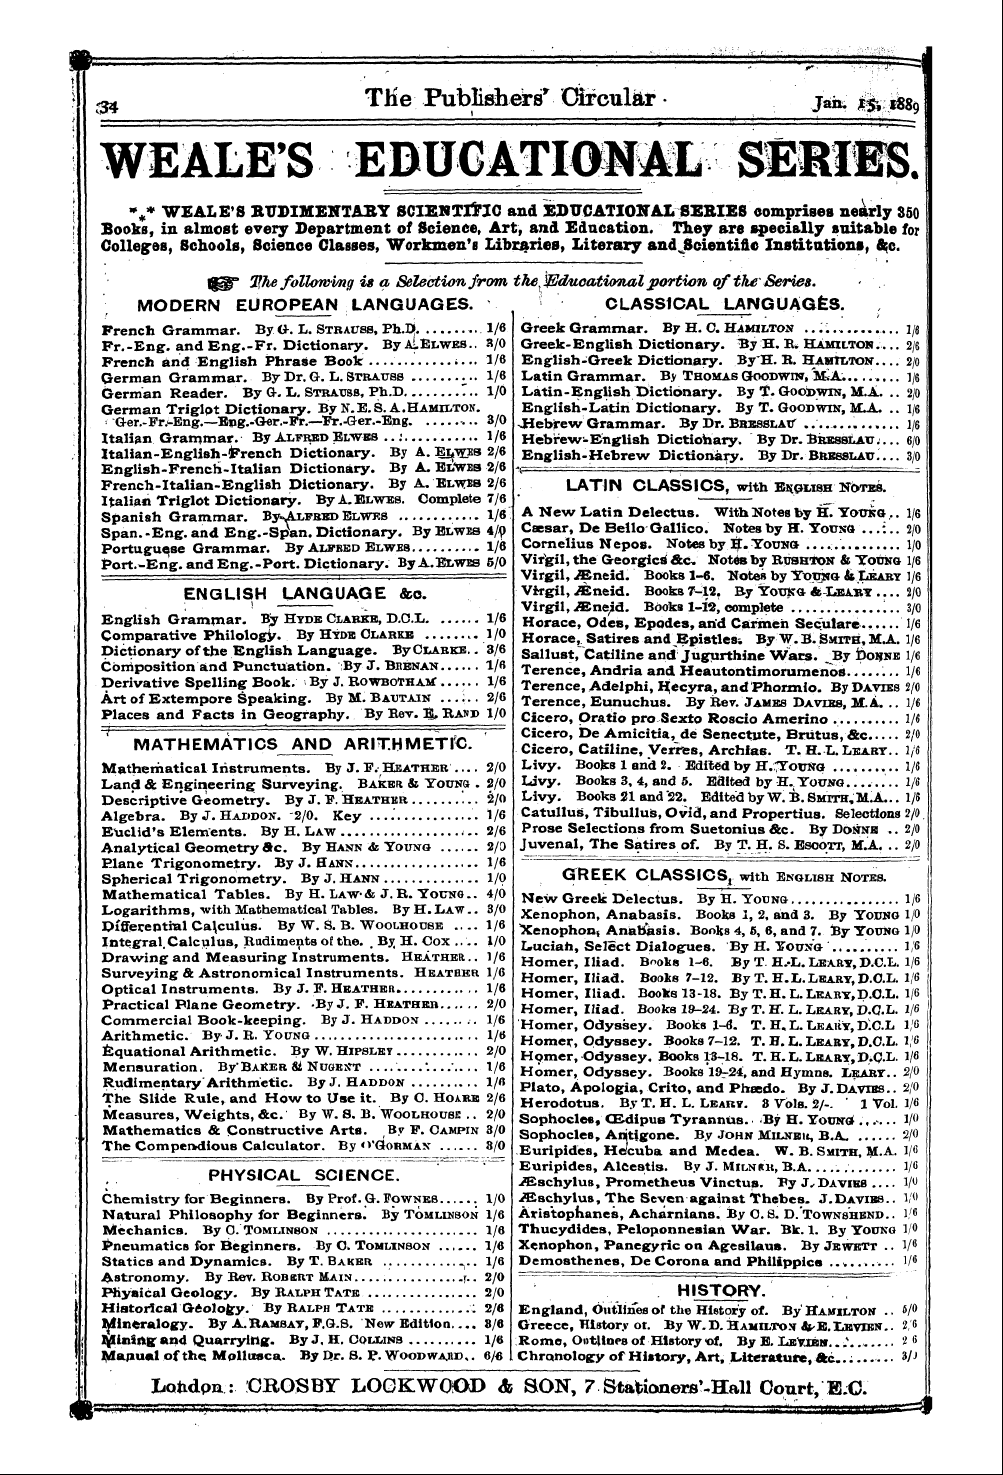 Publishers’ Circular (1880-1890): jS F Y, 1st edition: 36